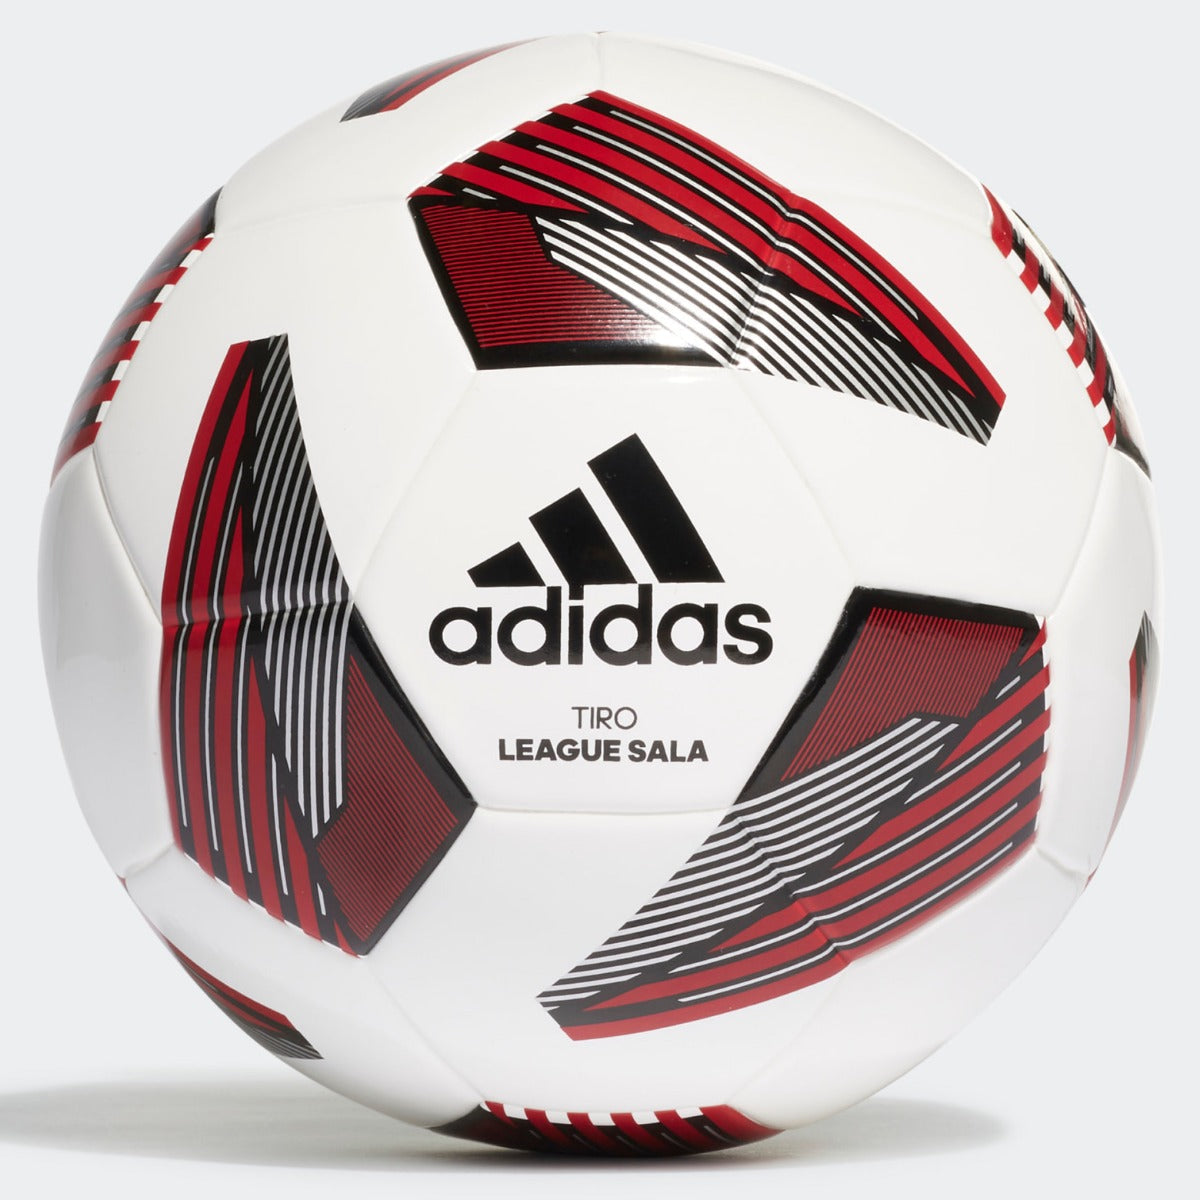 Adidas Tiro League Sala- White-Power Red-FUTS Ball & Bag Bundle